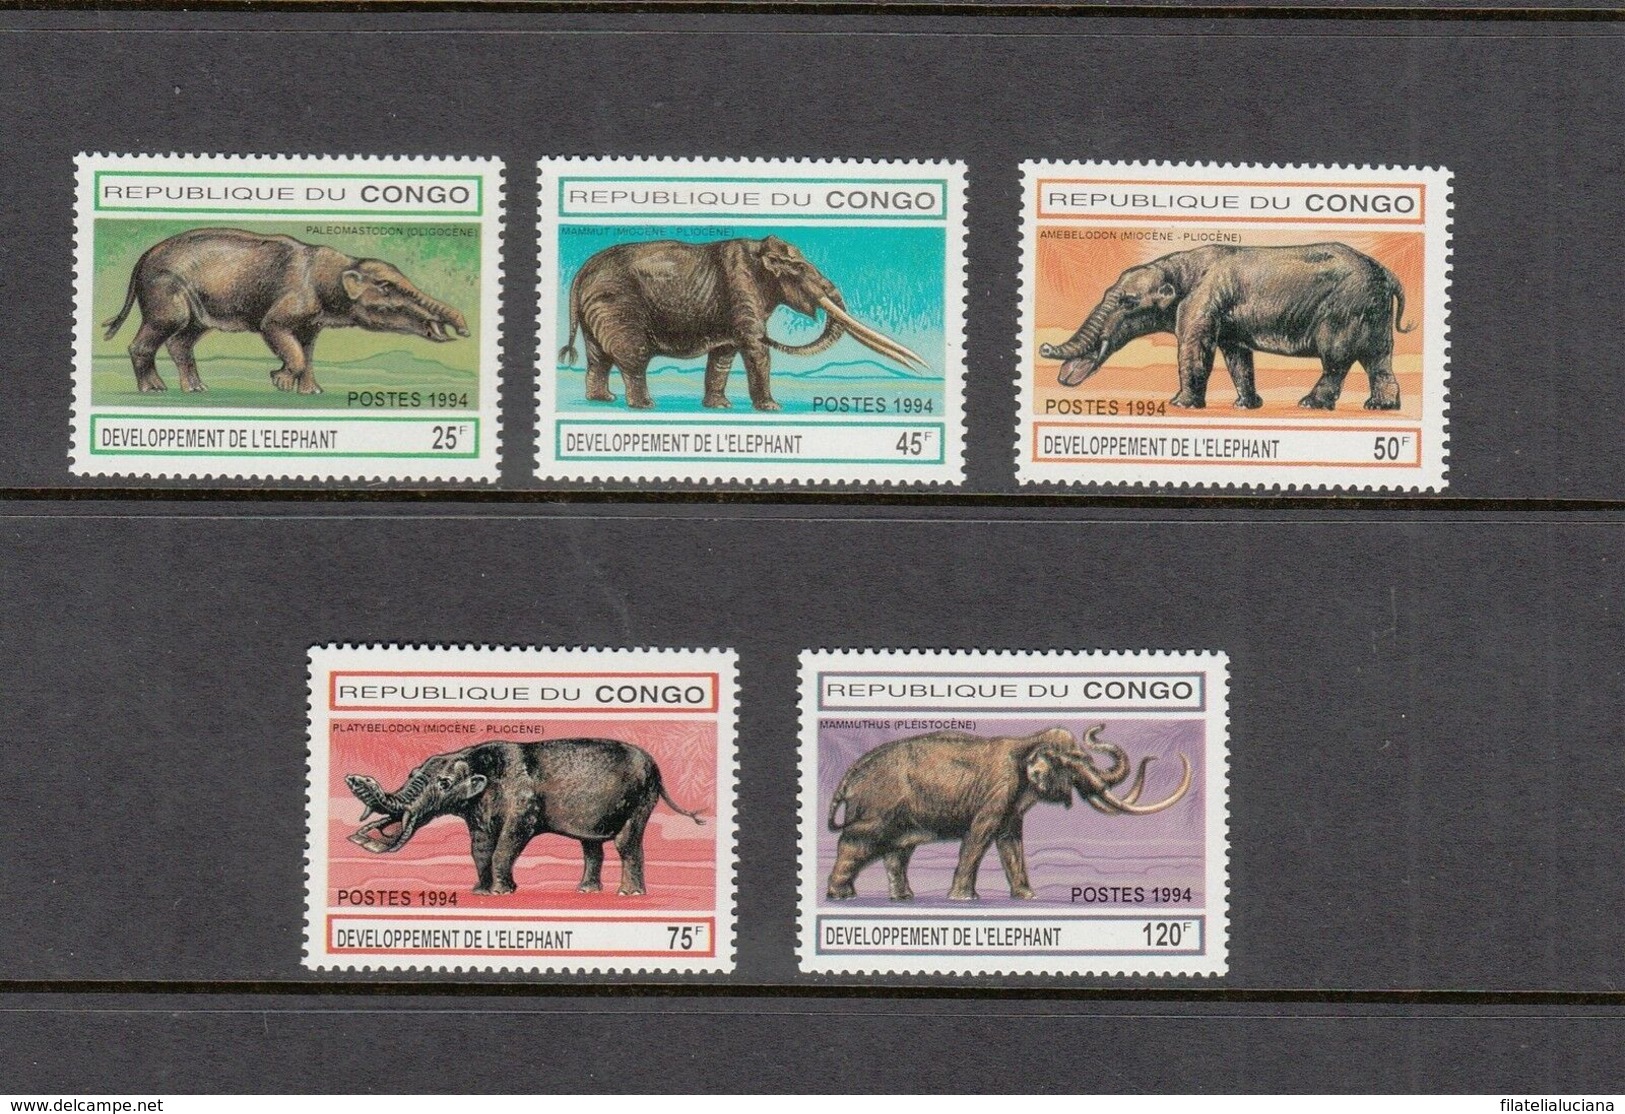 P.R Congo MNH Full Set Elephants Prehistoric Scott 1054-1058 - Prehistorics